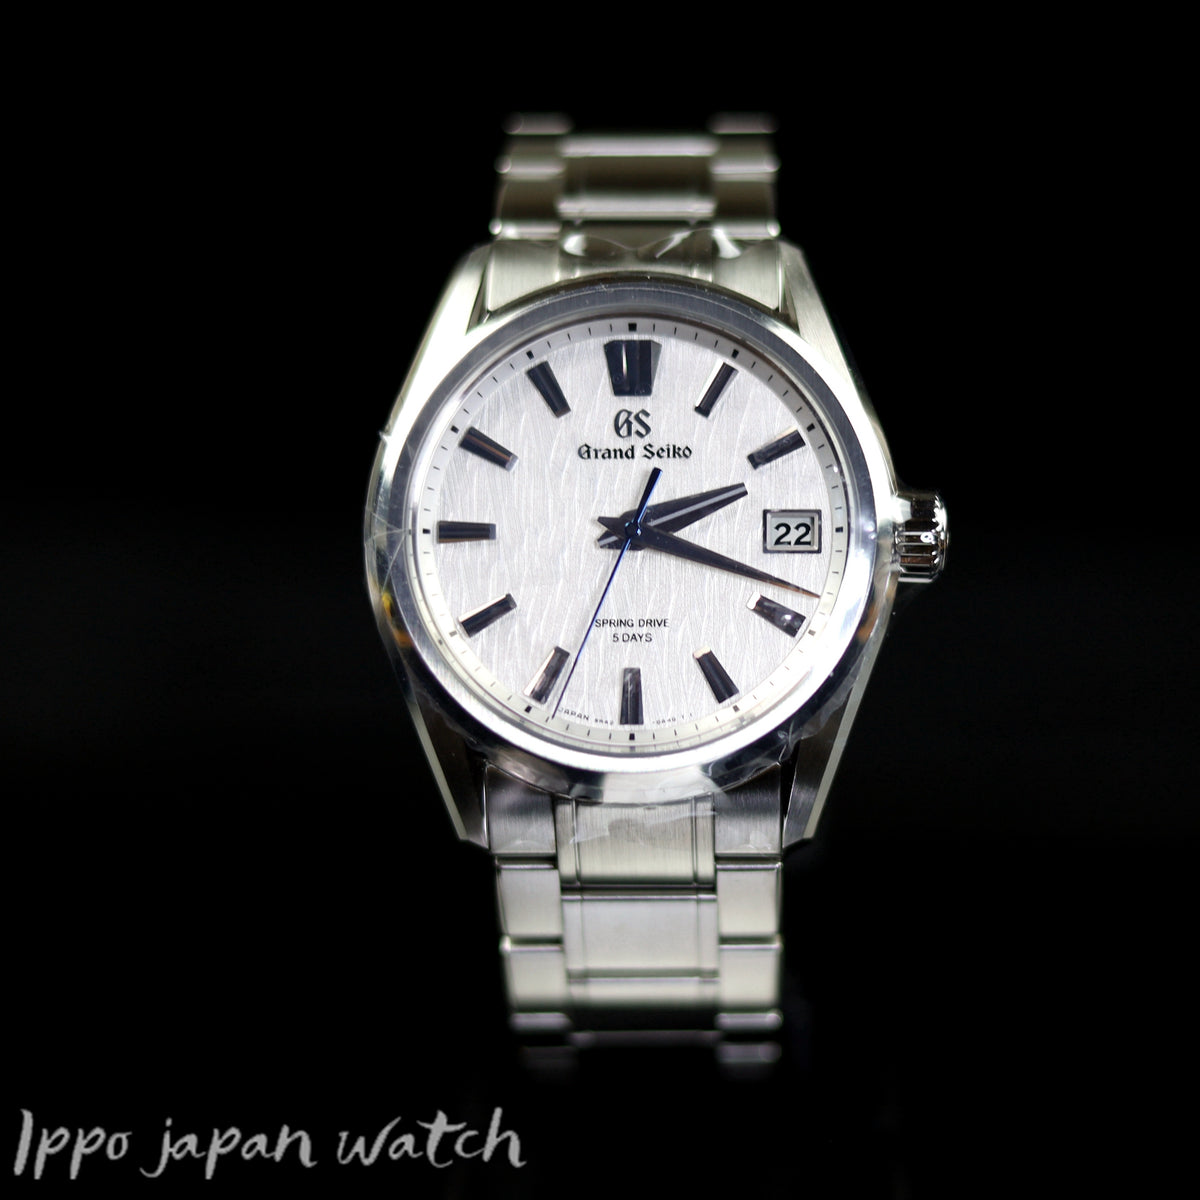 Grand Seiko Evolution 9 Collection SLGA009 Spring drive watch - IPPO JAPAN WATCH 